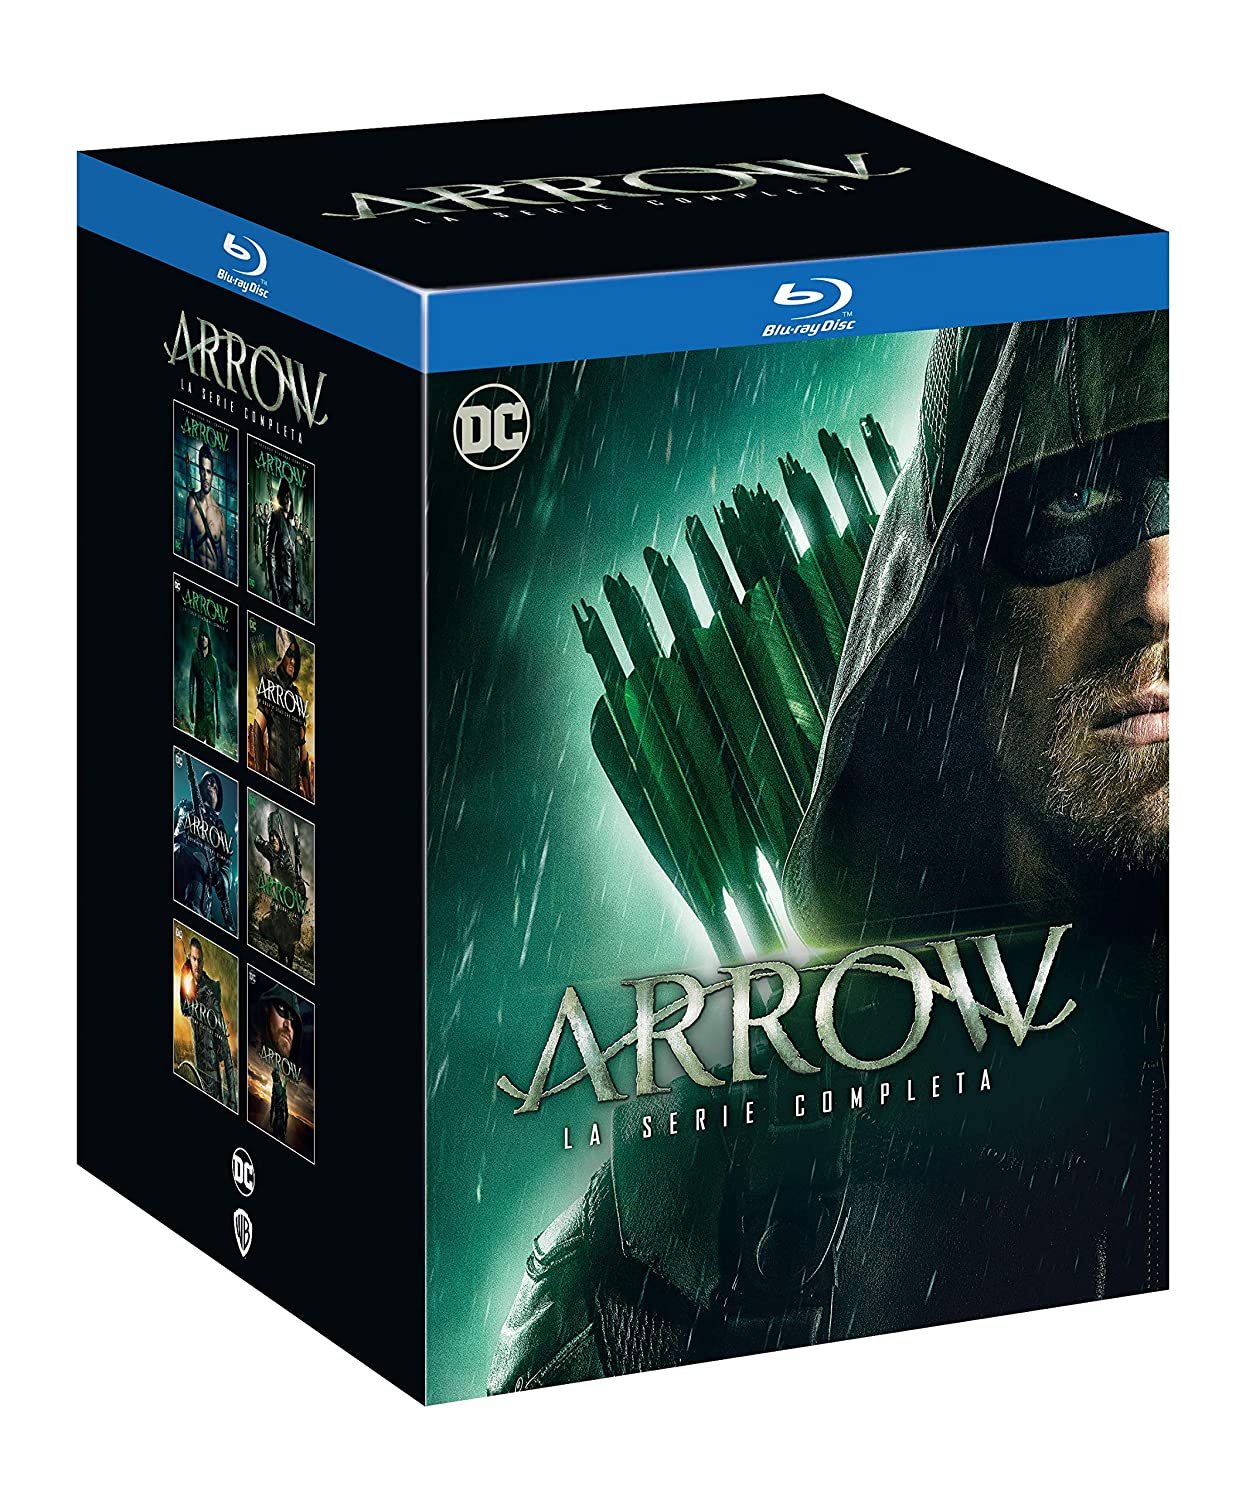 Arrow, home video, cofanetto, blu ray, dvd